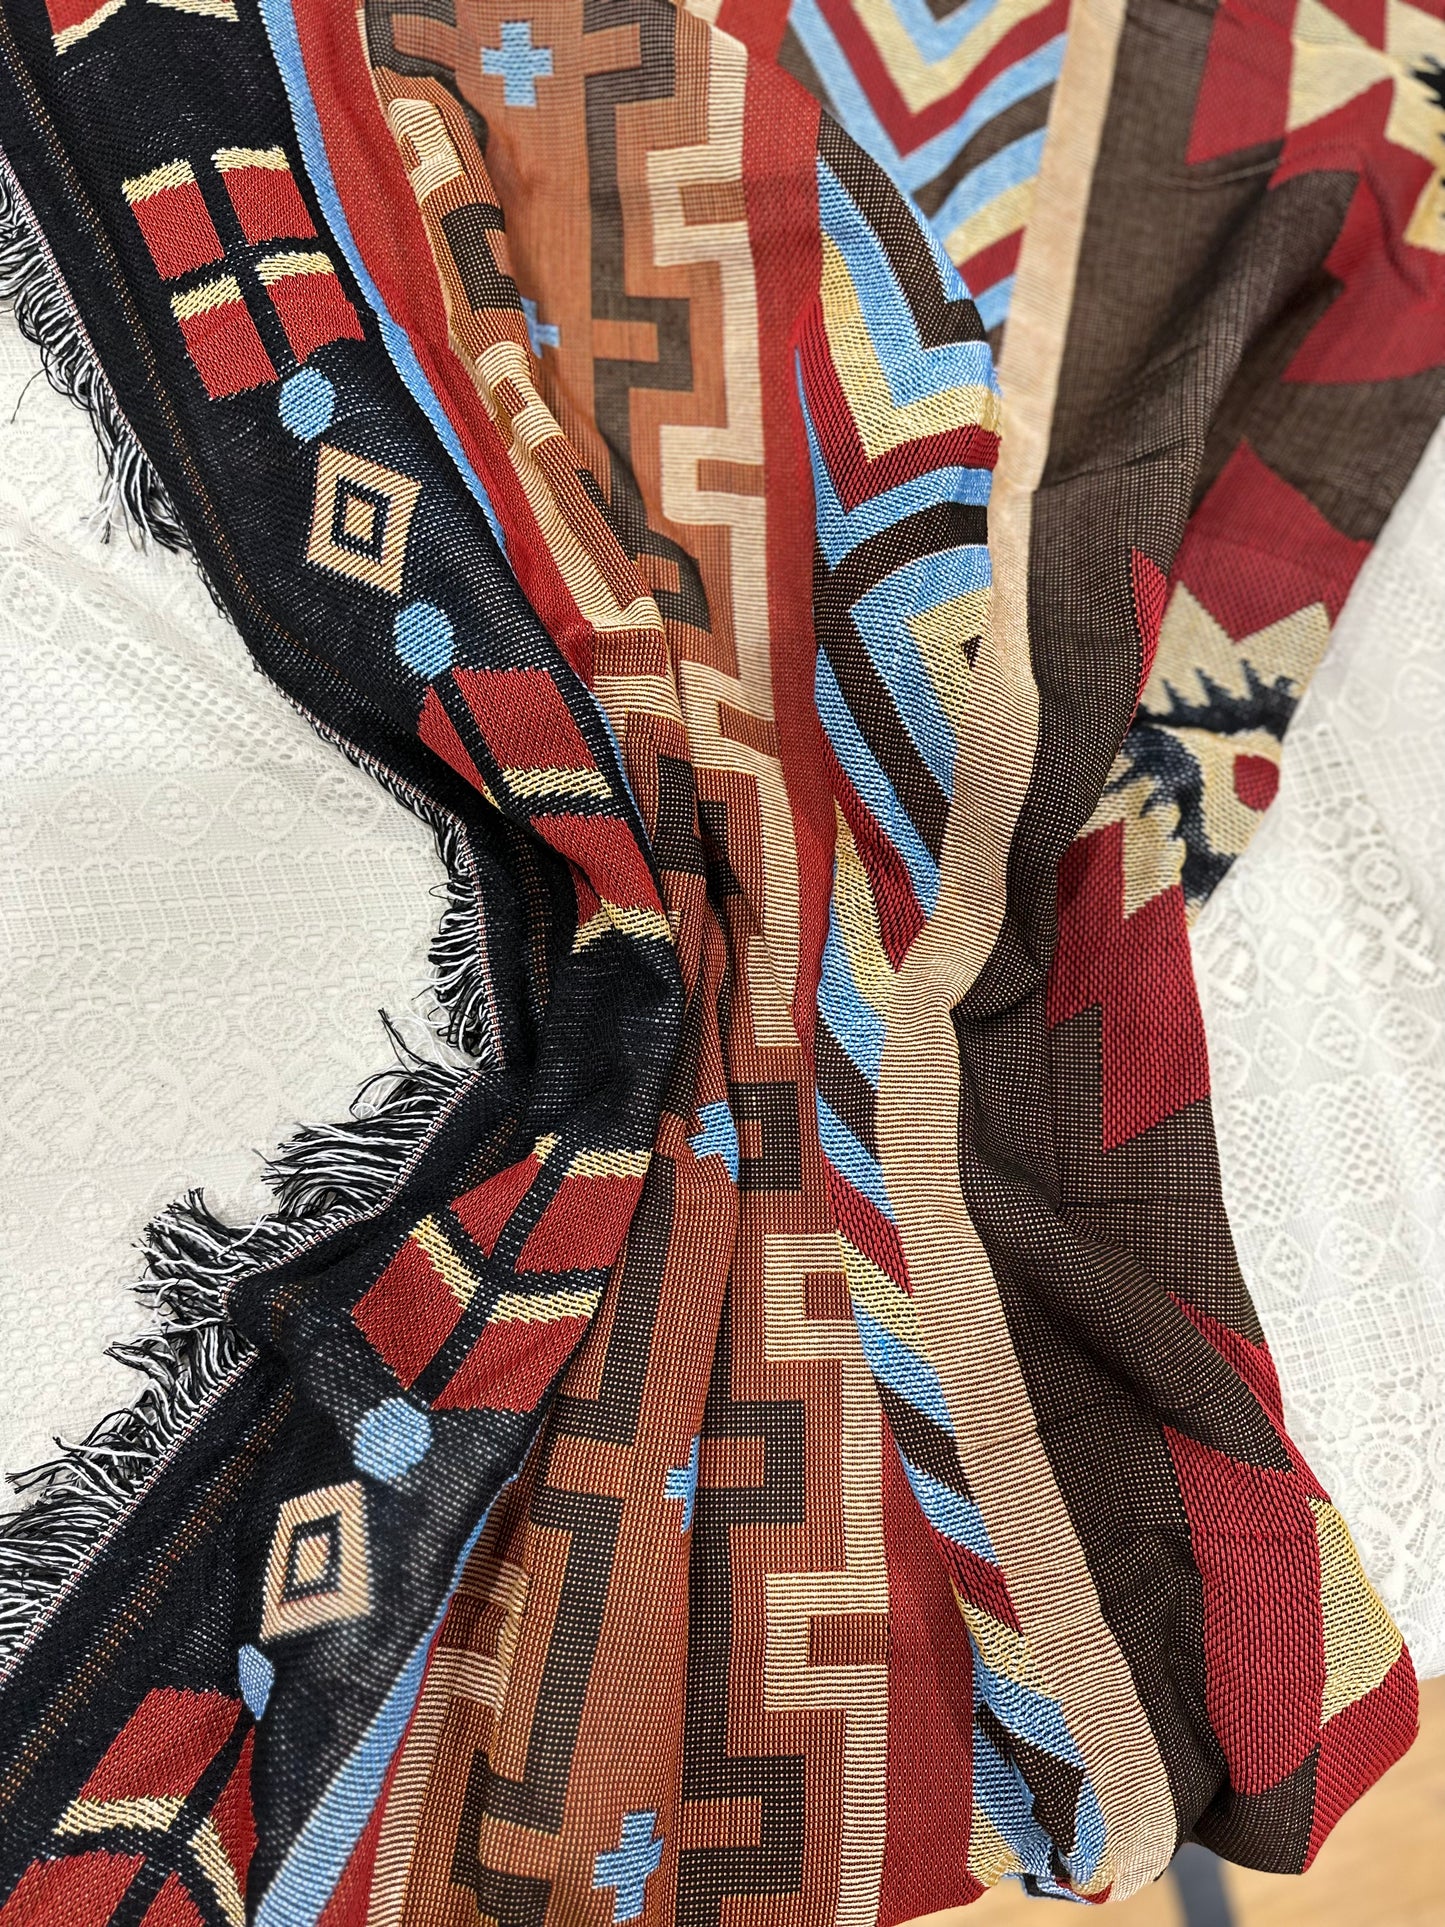 Aztec style blanket/throw